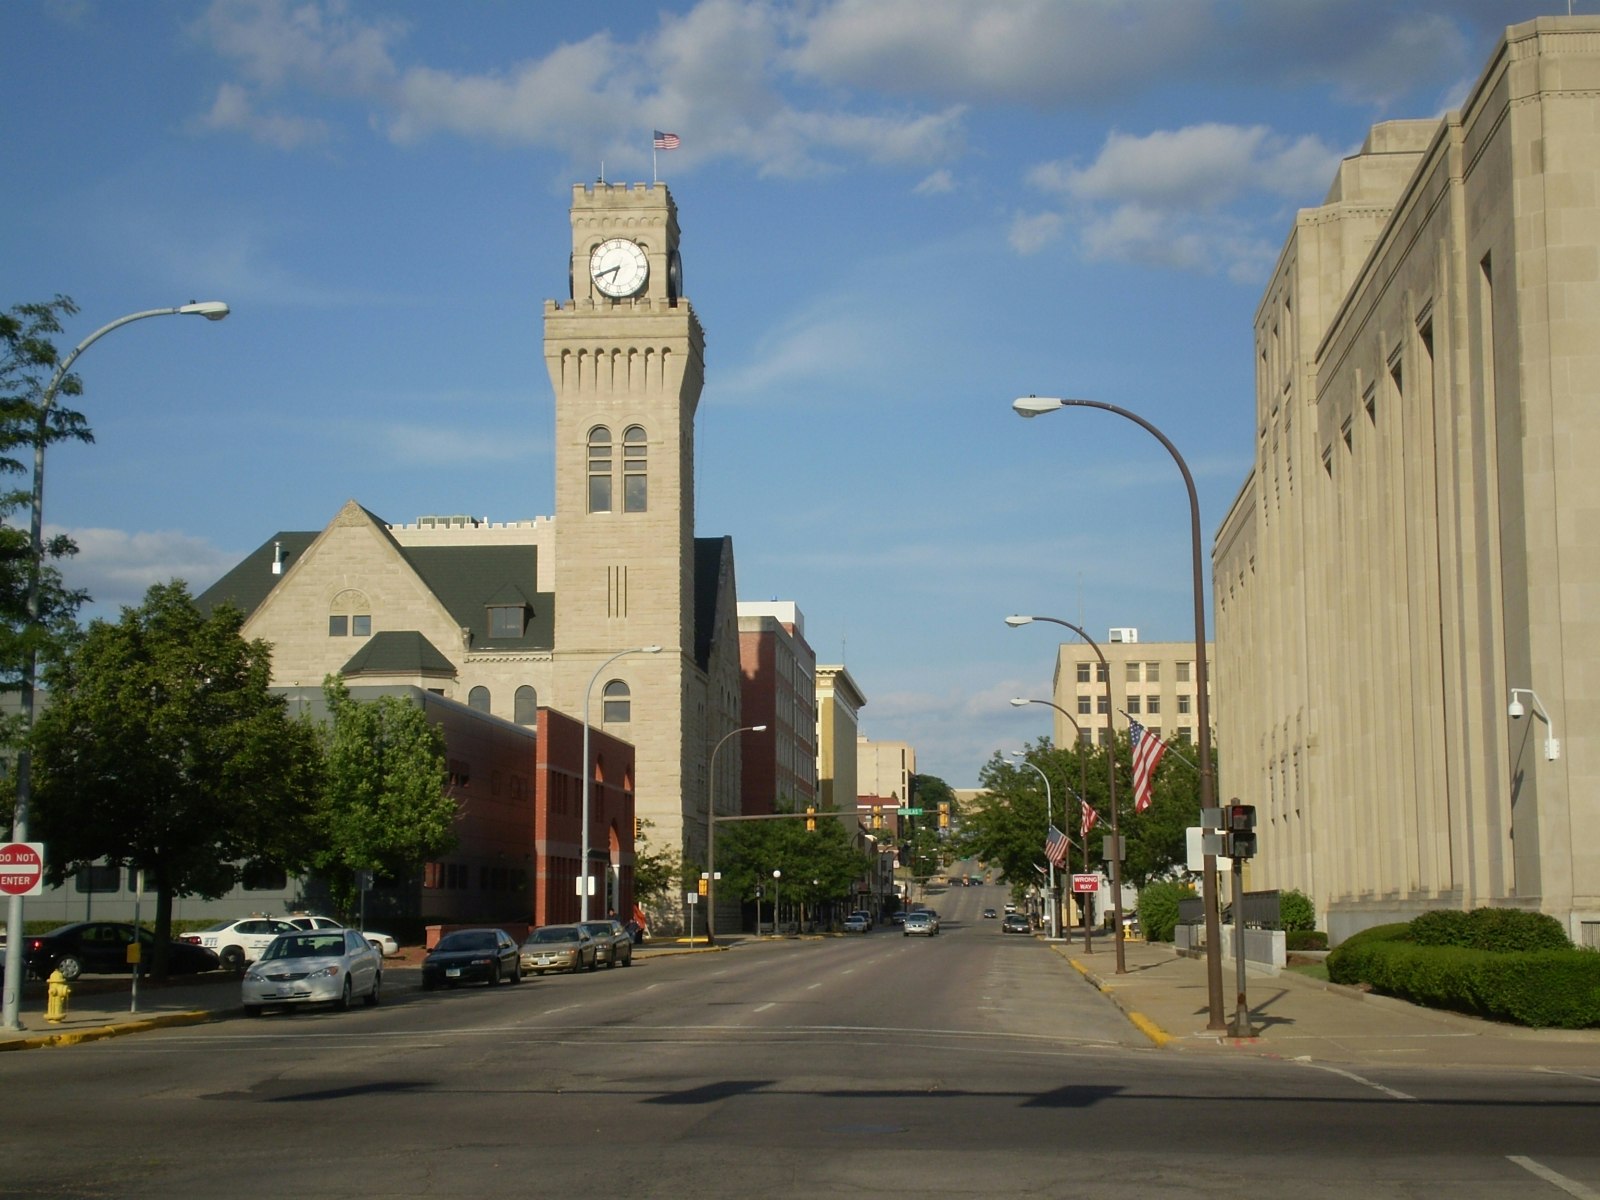 A downtown street scene of Sioux City, Iowa